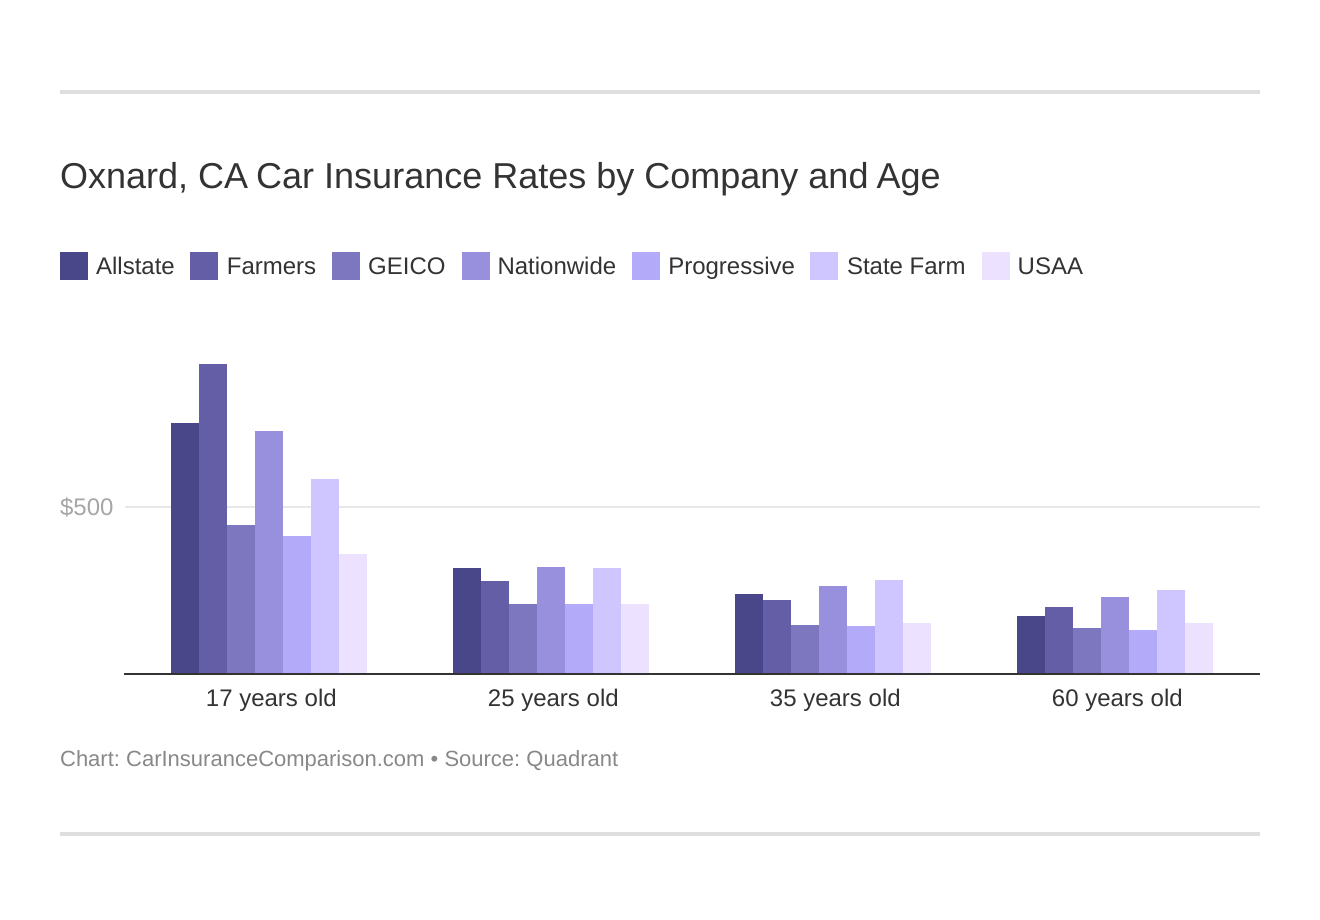 Oxnard, CA Car Insurance Rates by Company and Age